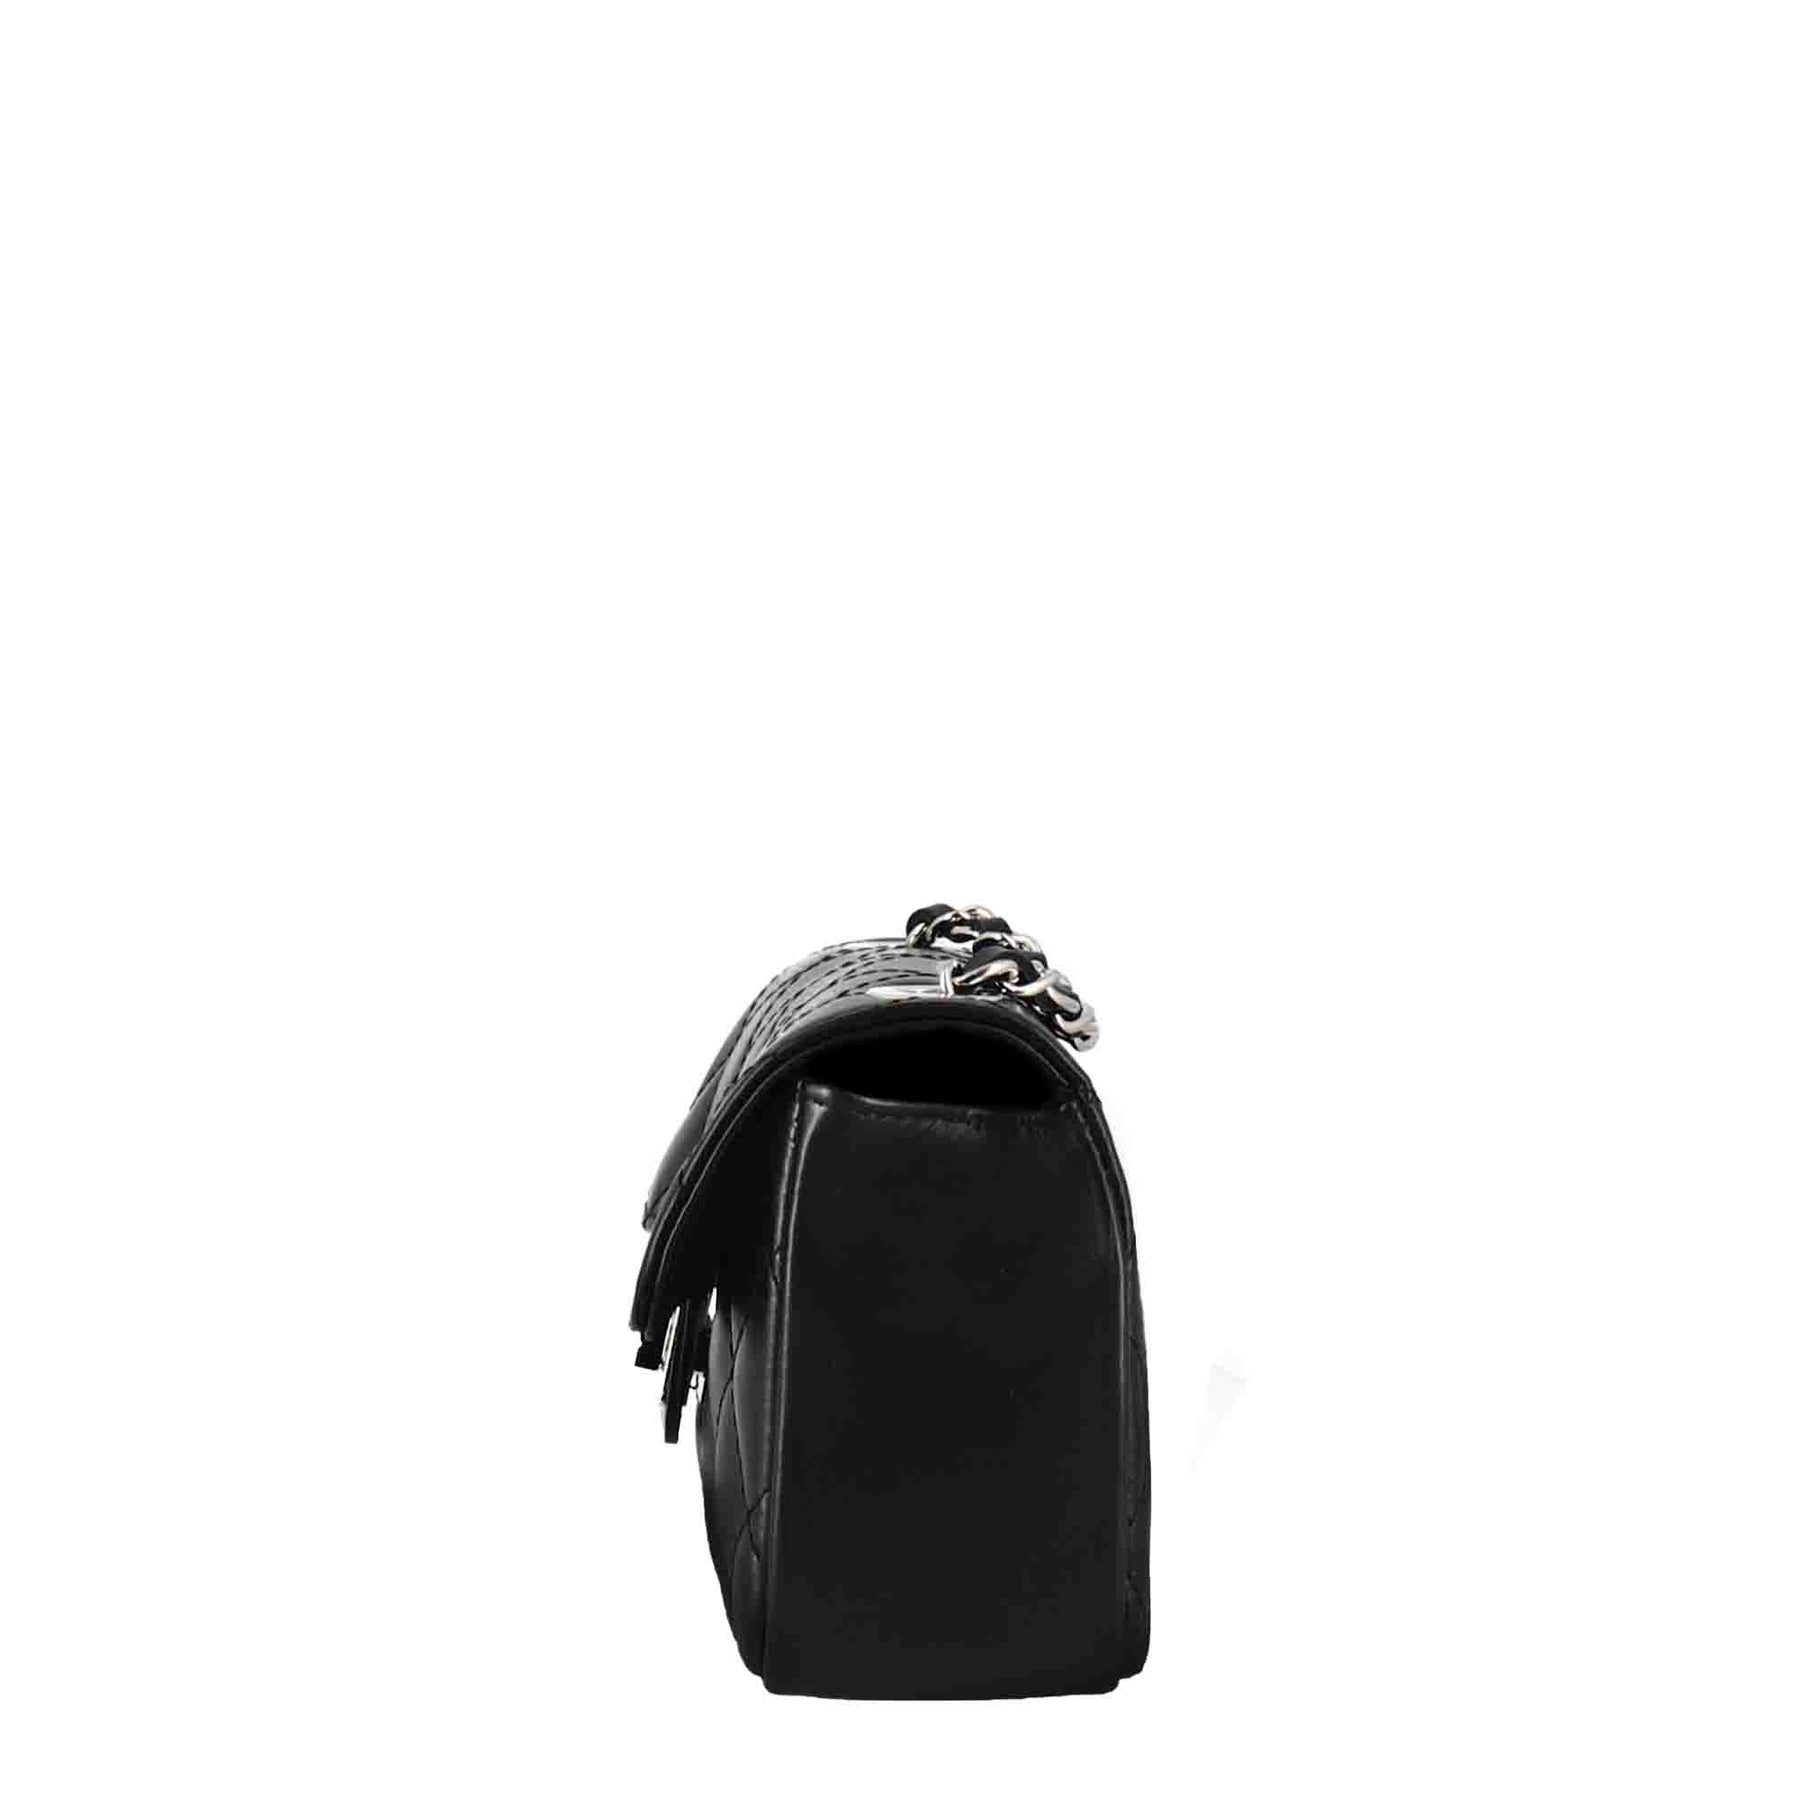 Vanity shoulder bag in balck quilted leather